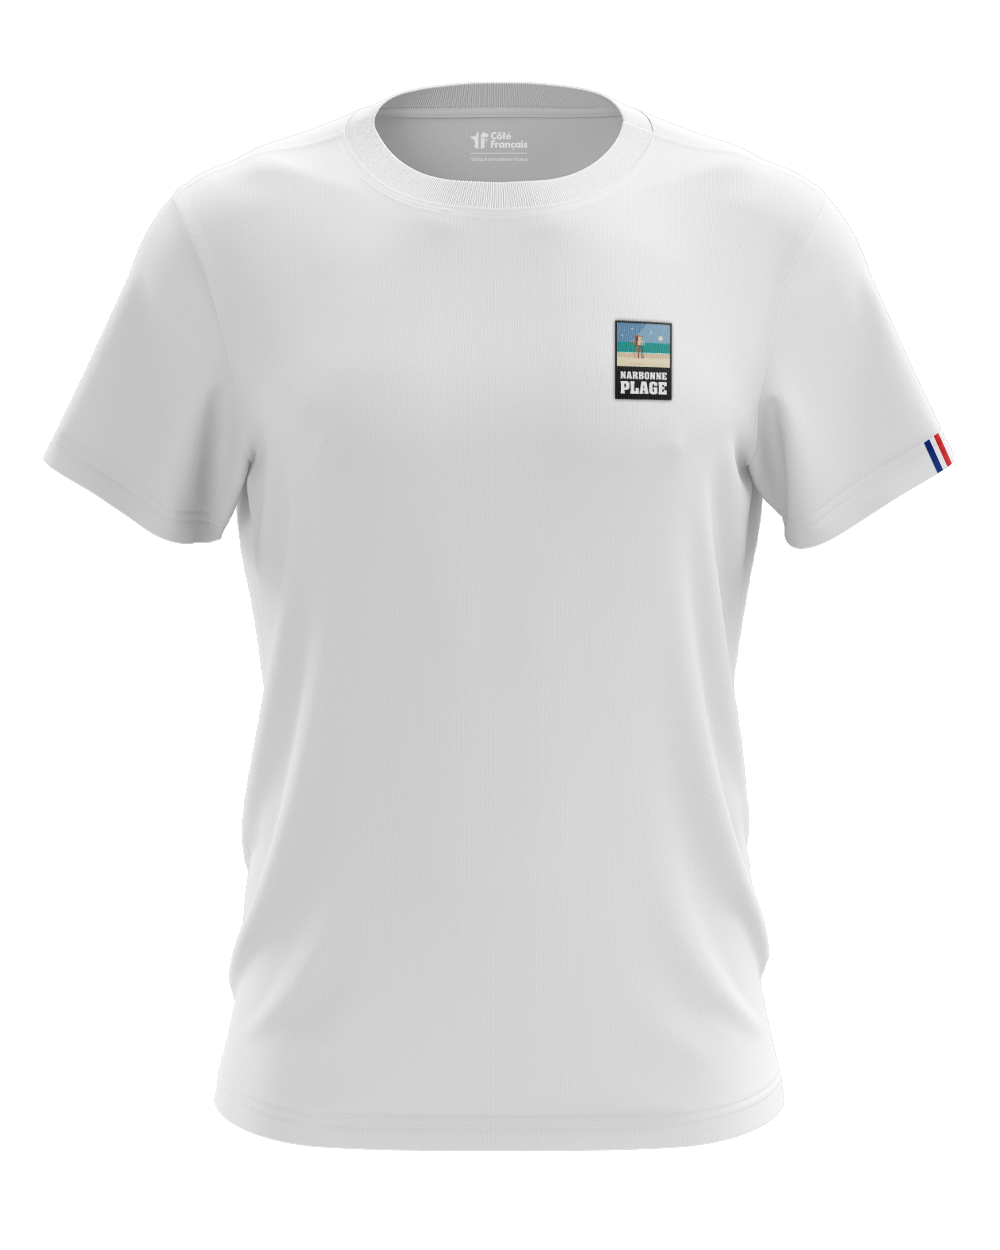 T-Shirt "Narbonne plage" - blanc